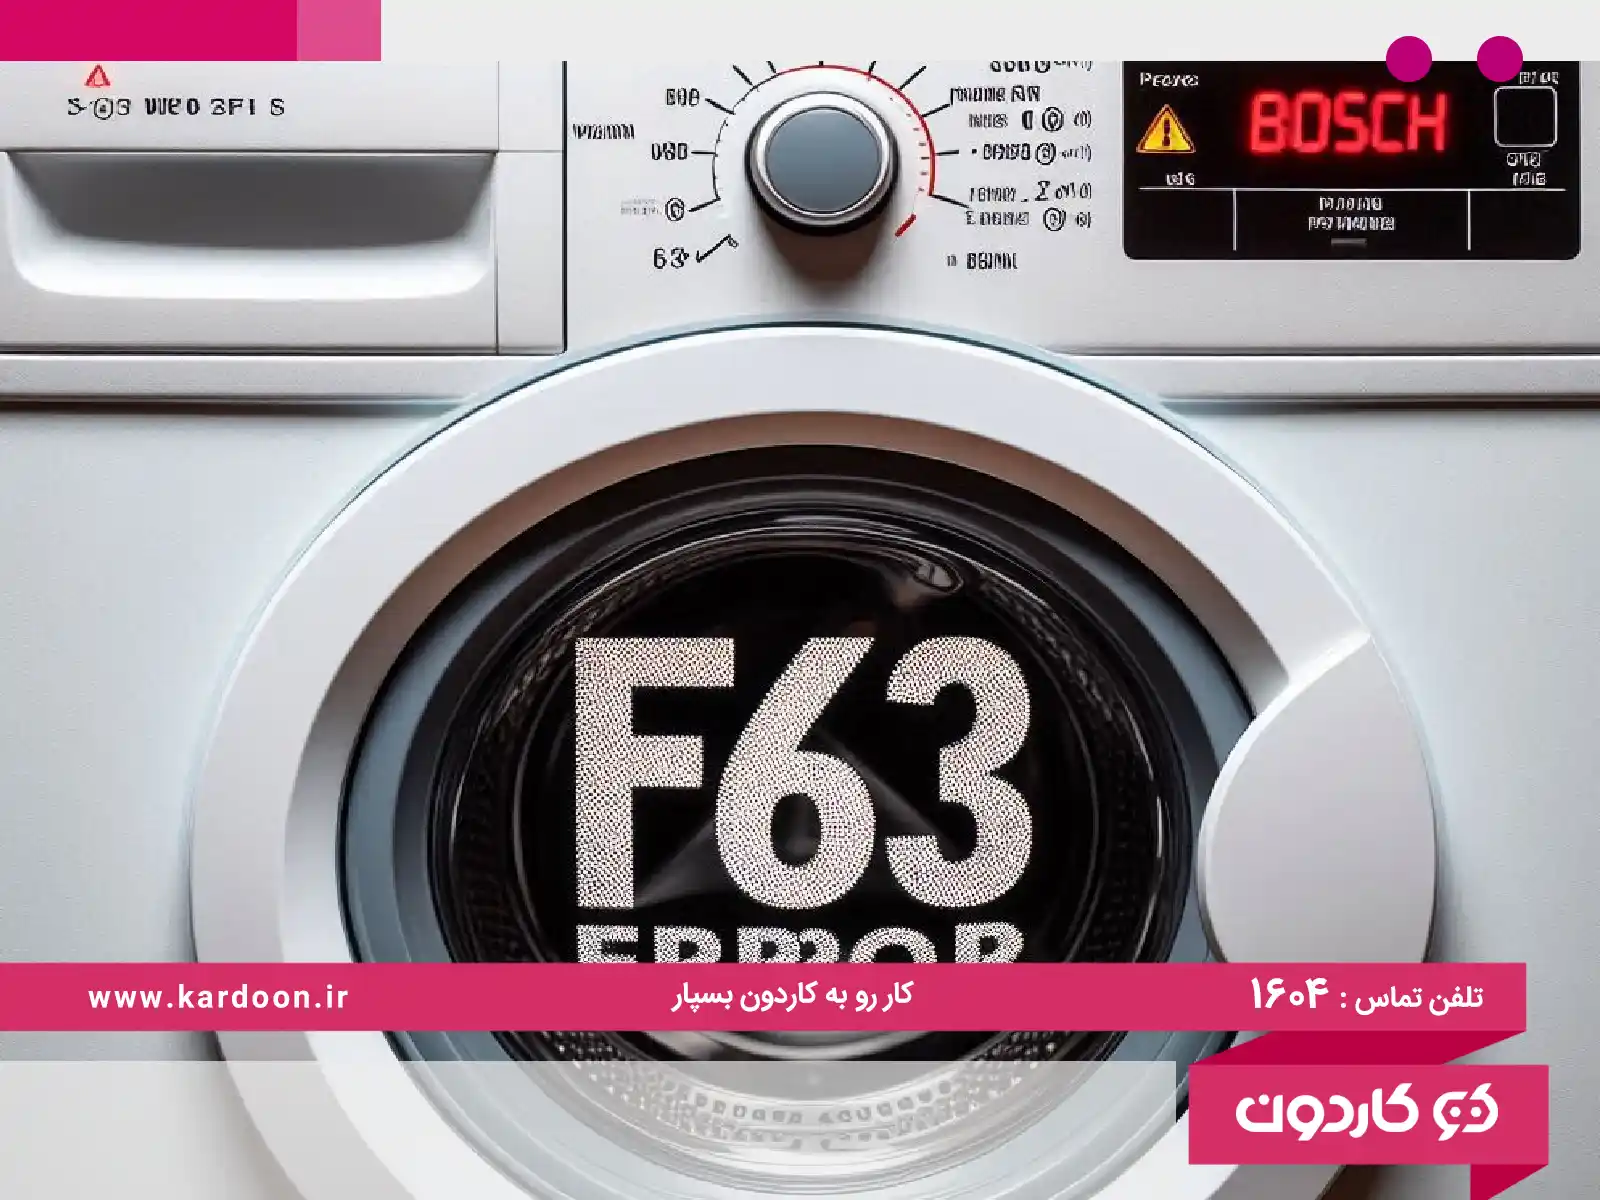 What is the cause of Bosch washing machine error f63